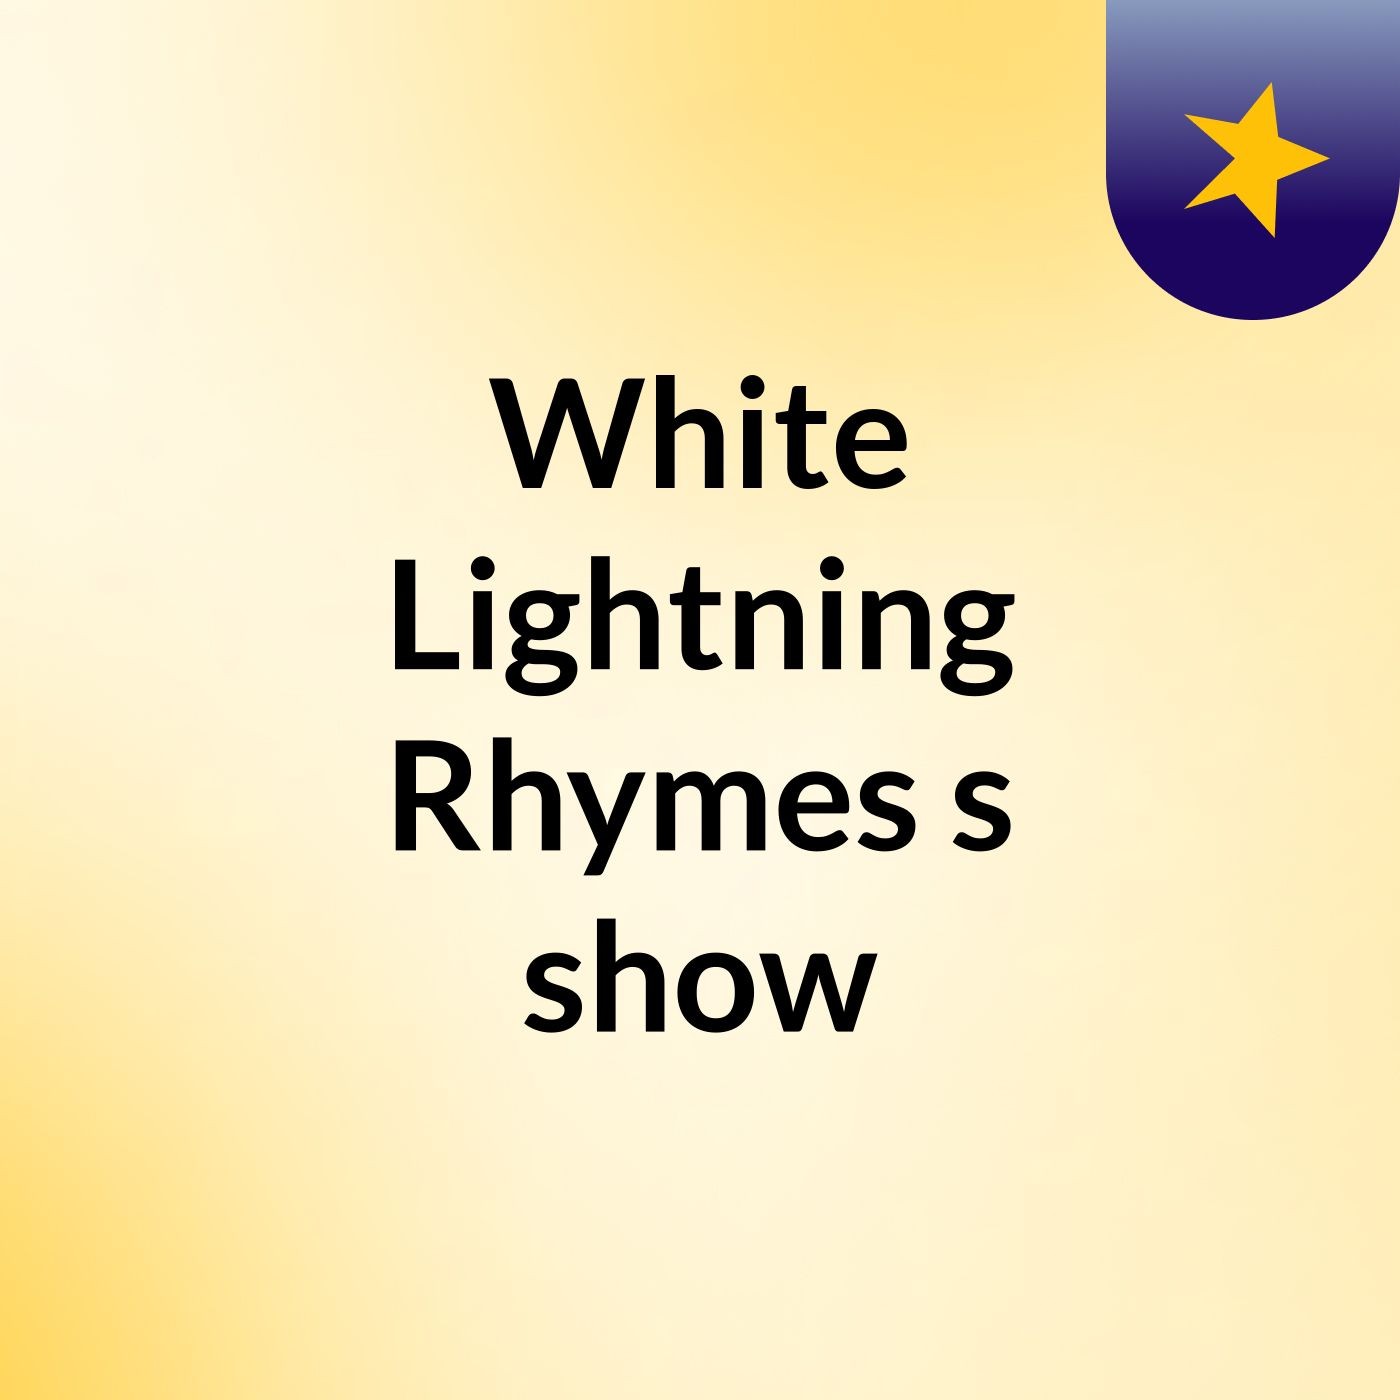 White Lightning Rhymes's show